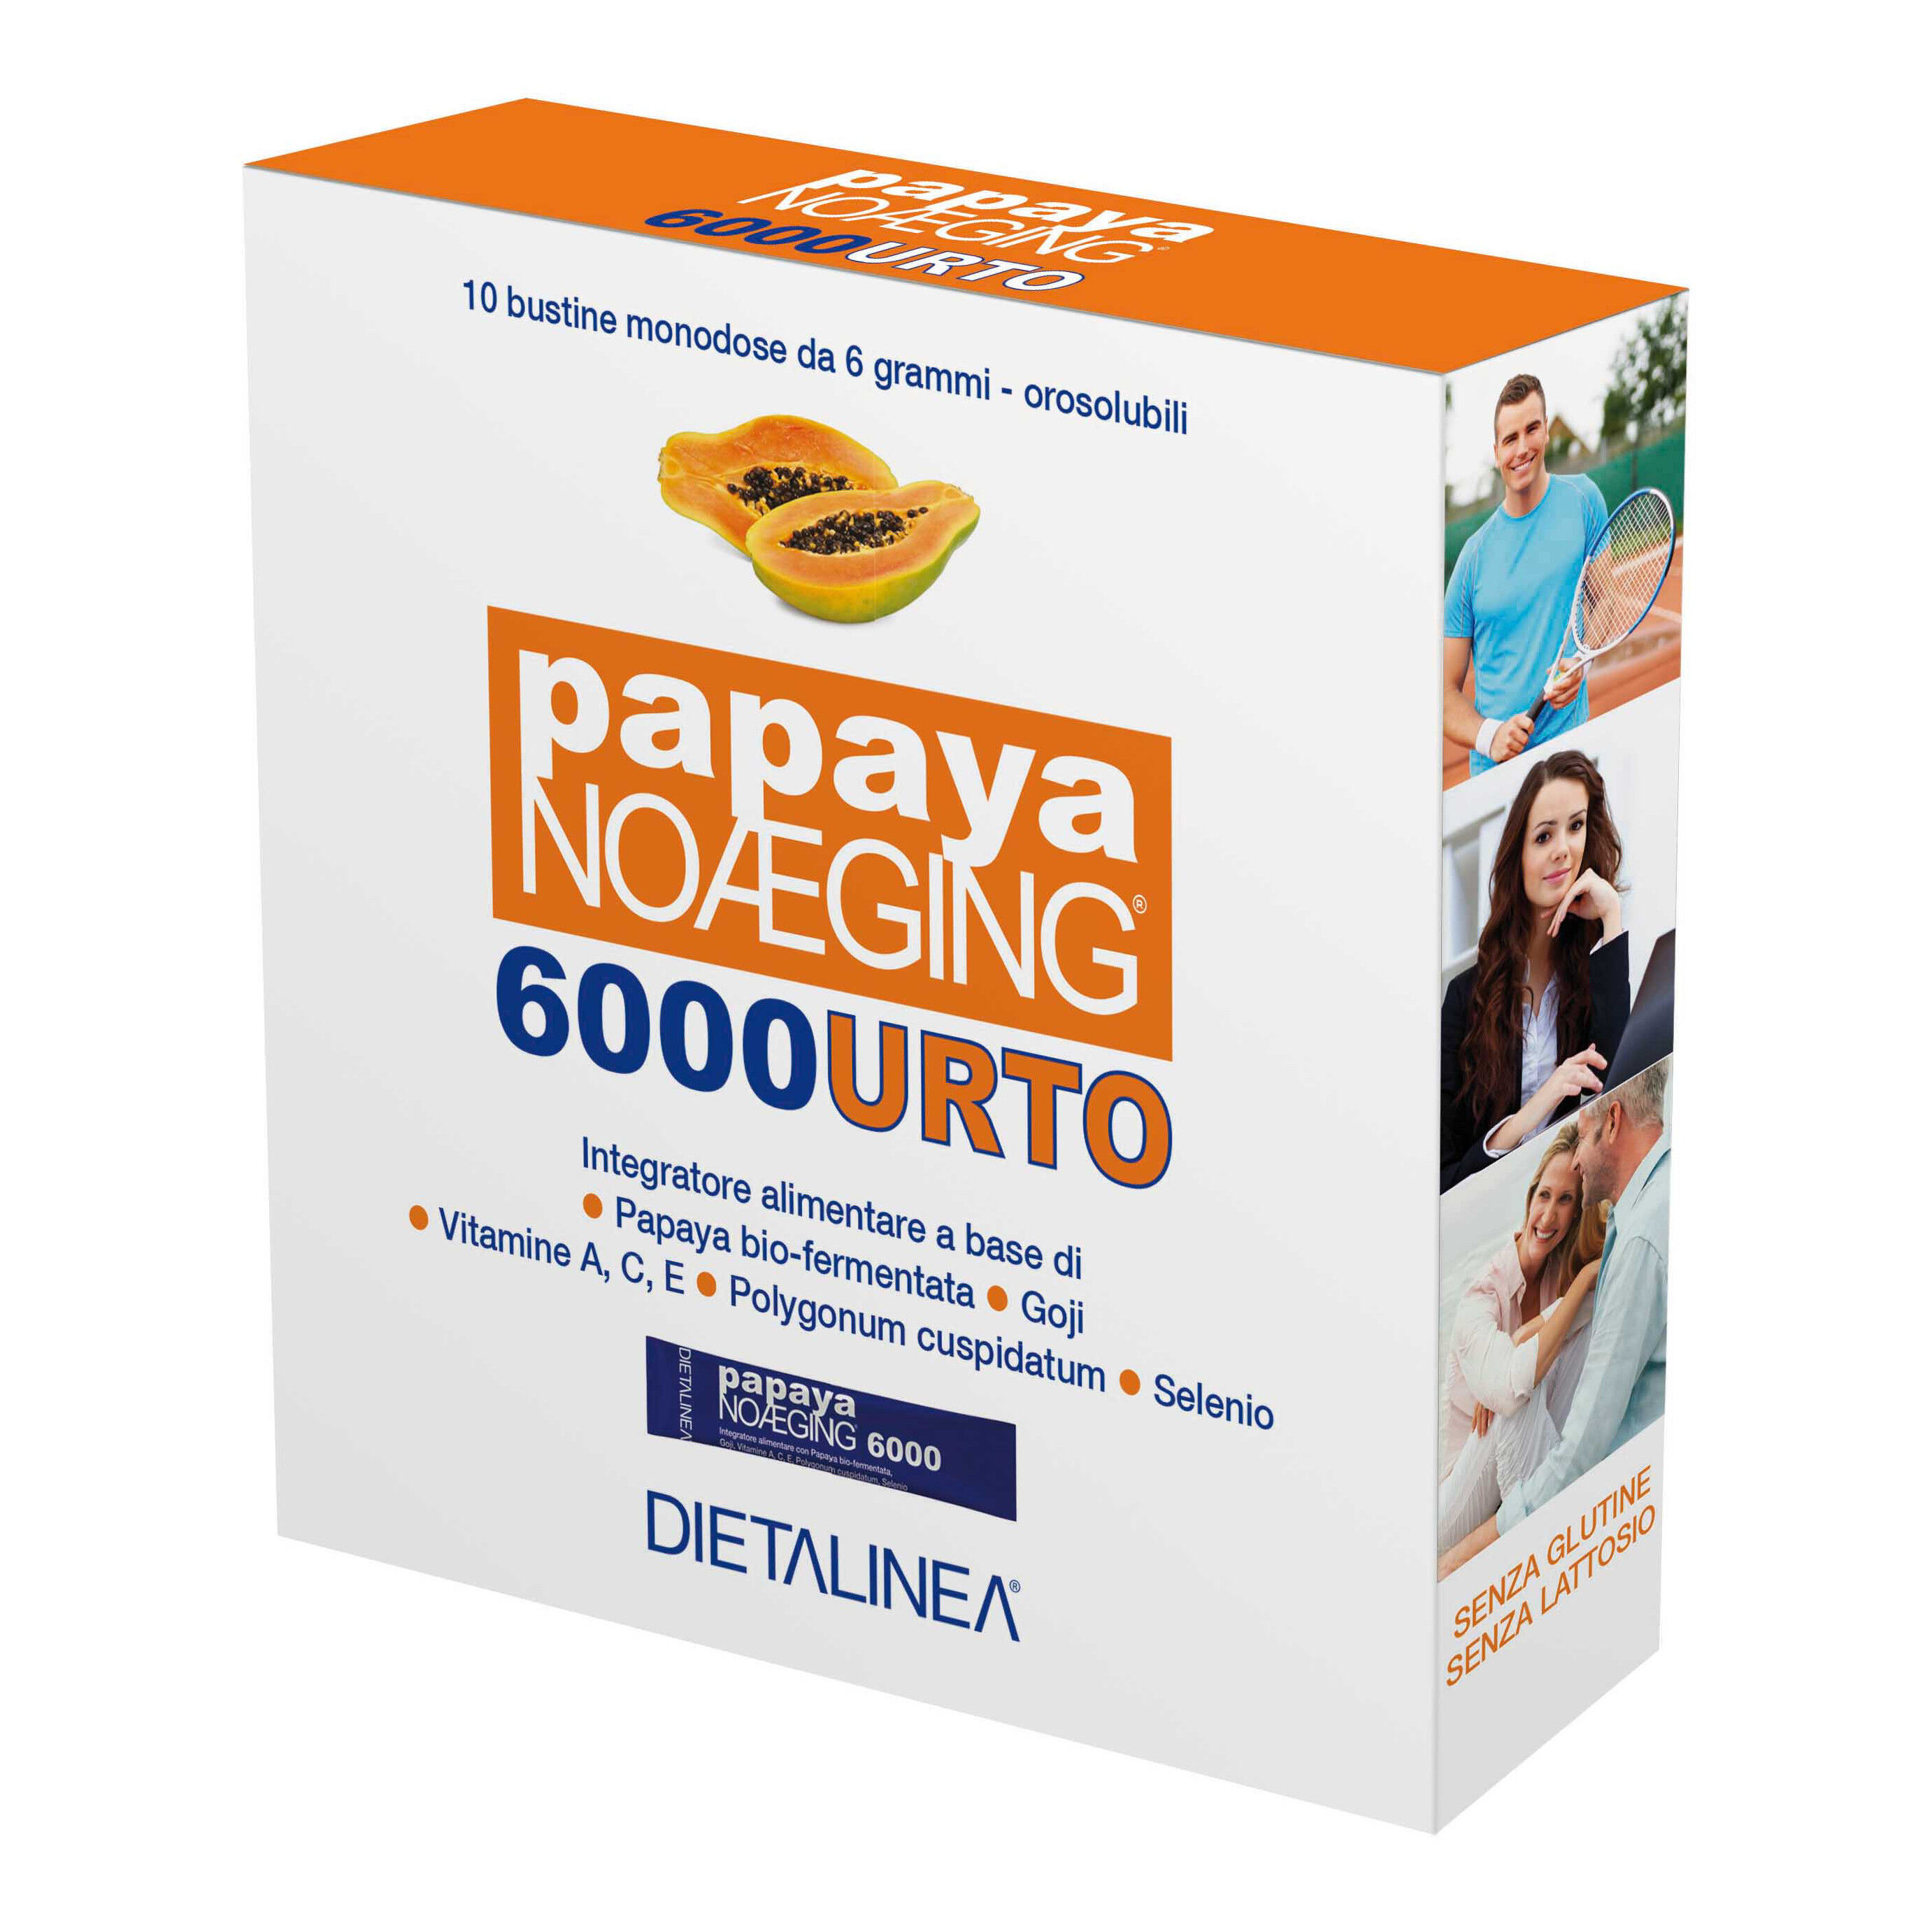 gdp srl-general dietet.pharma dietalinea papaya noaging 6000 10 bustine monodose 6 g astuccio 60 g